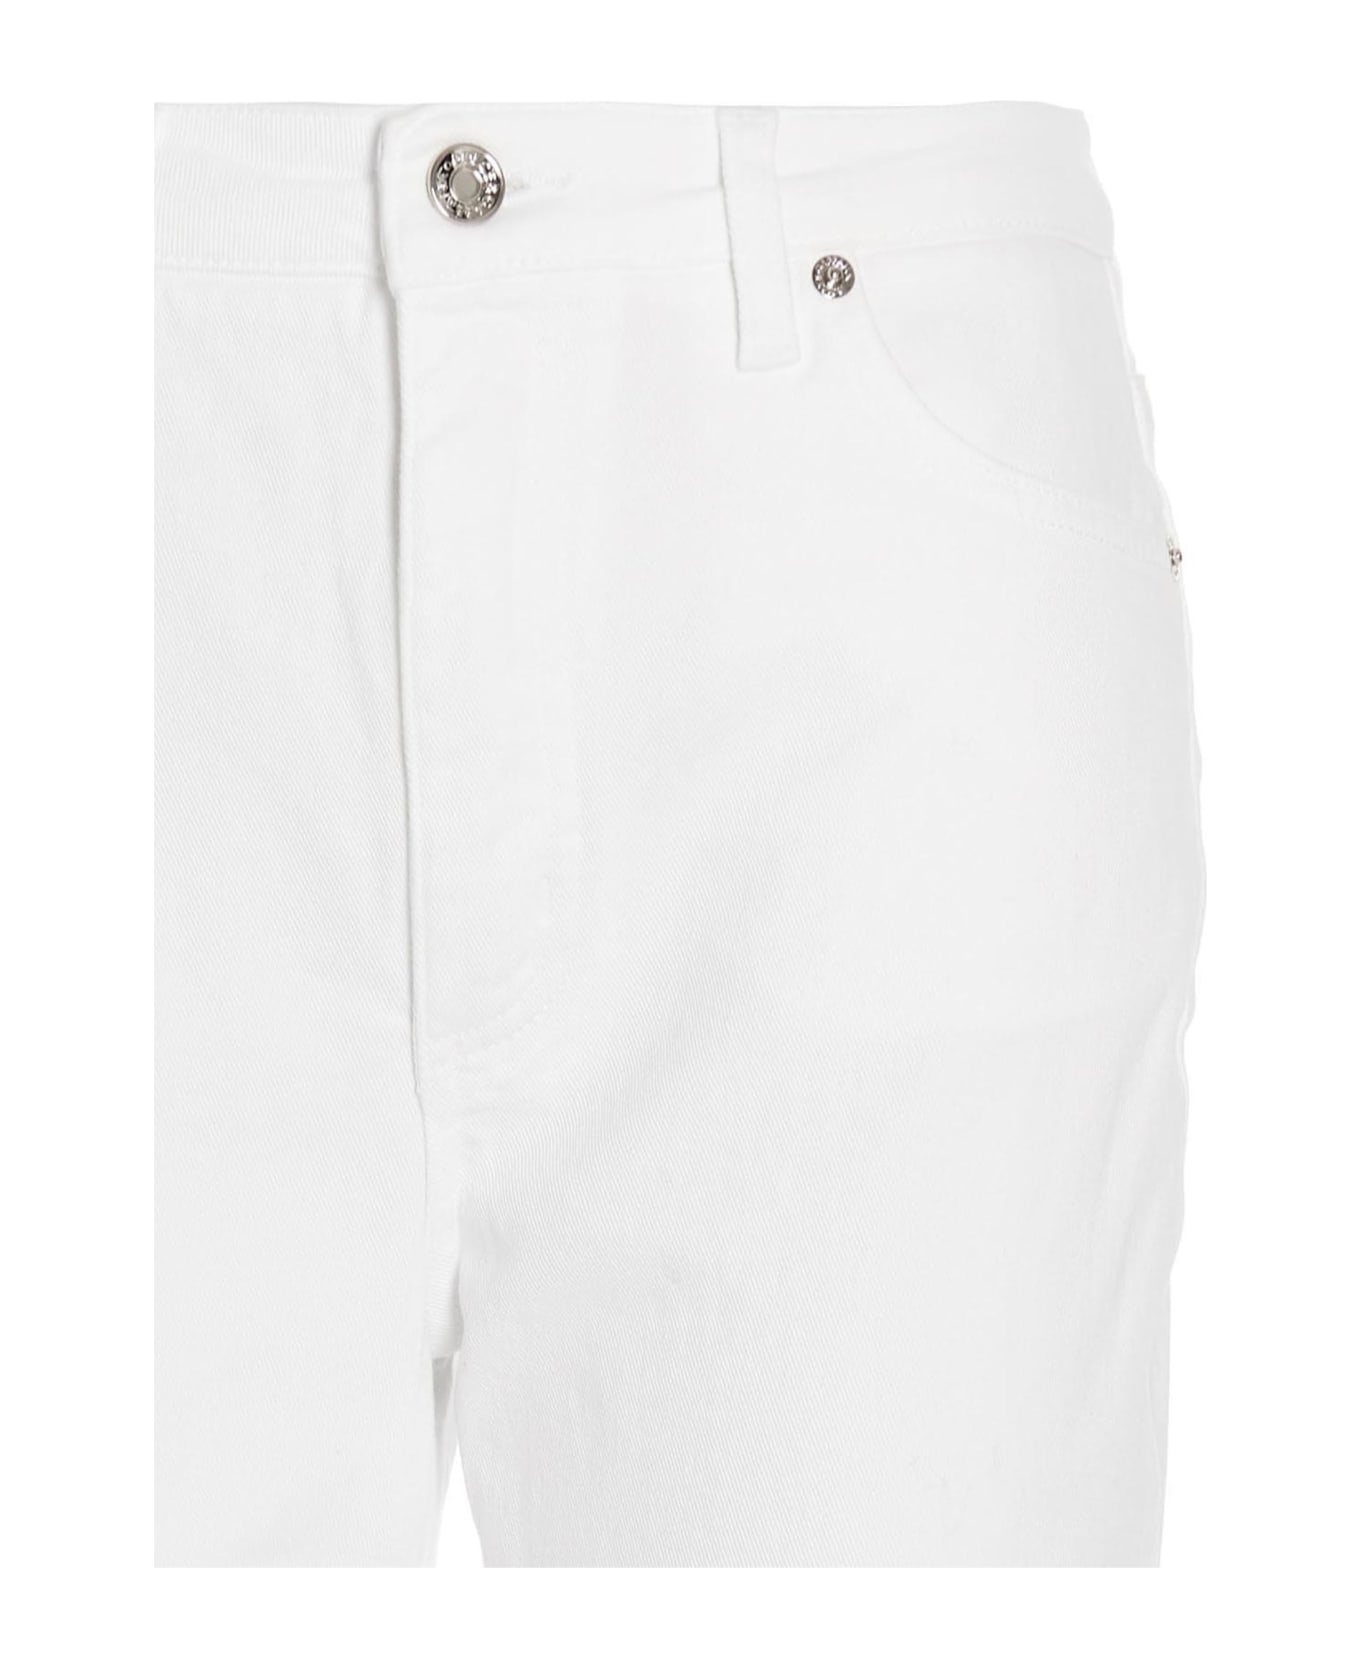 Dolce & Gabbana Audrey Jeans - White